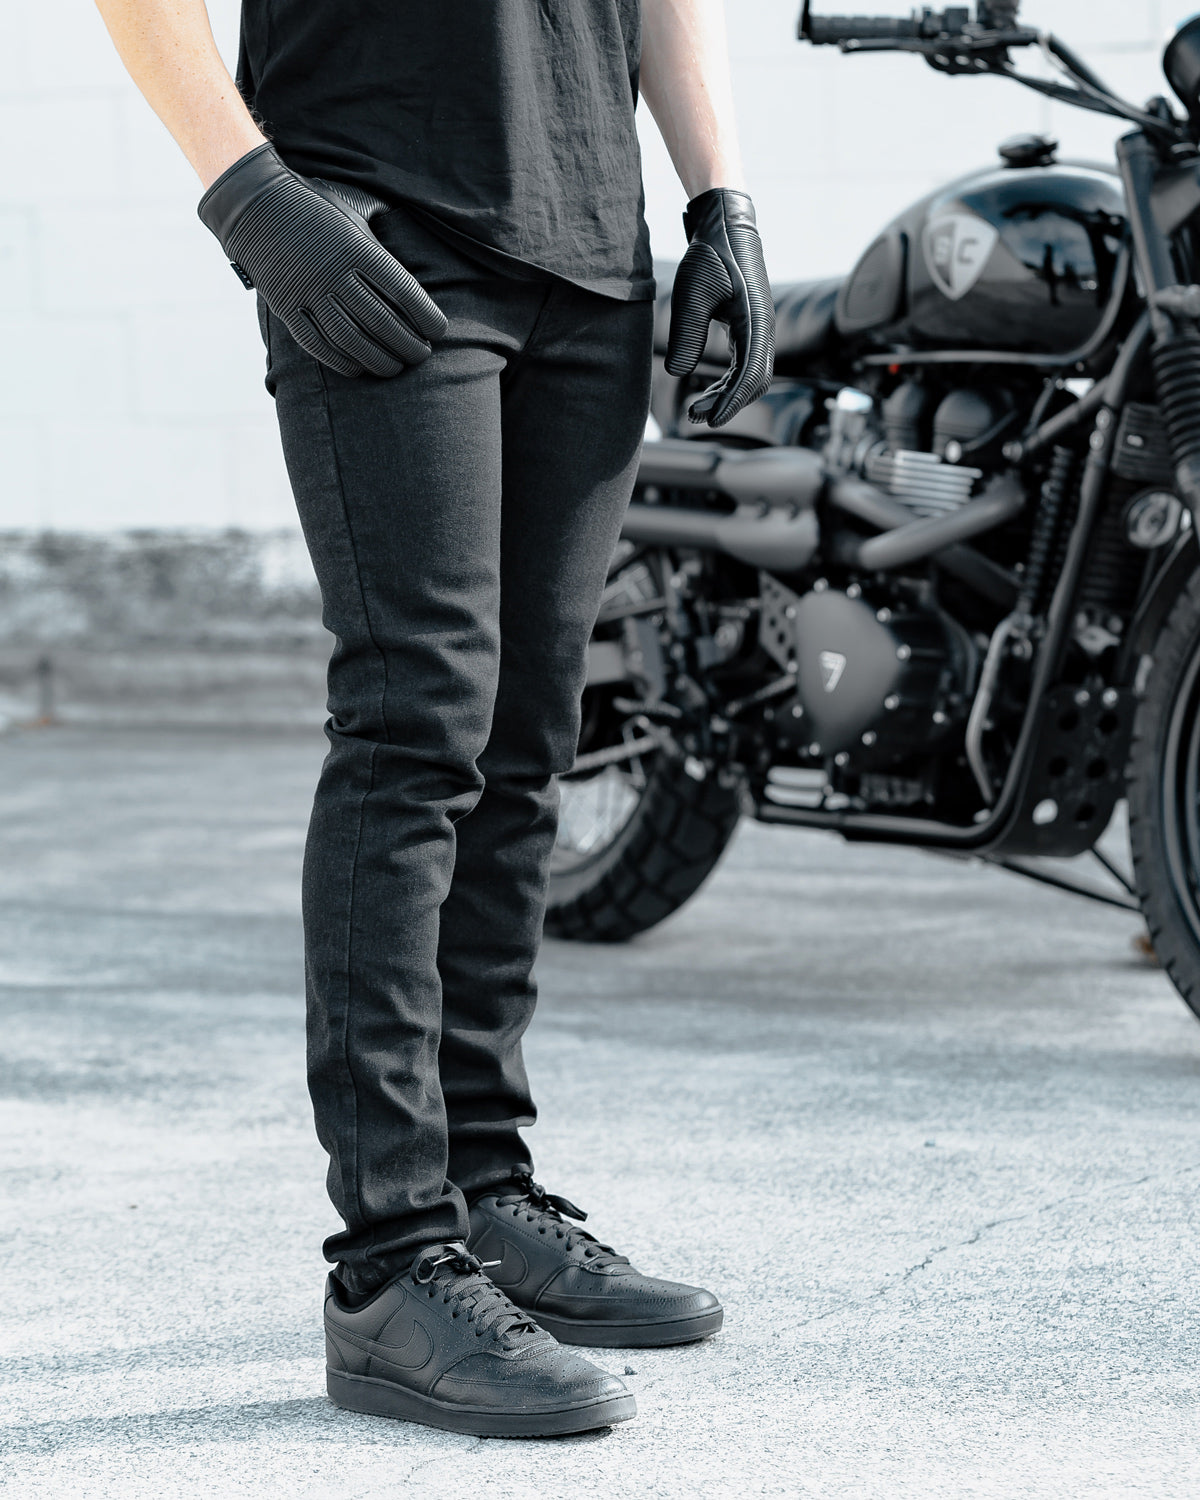 Pando Moto Jeans: Blacker, Safer, Comfier - webBikeWorld